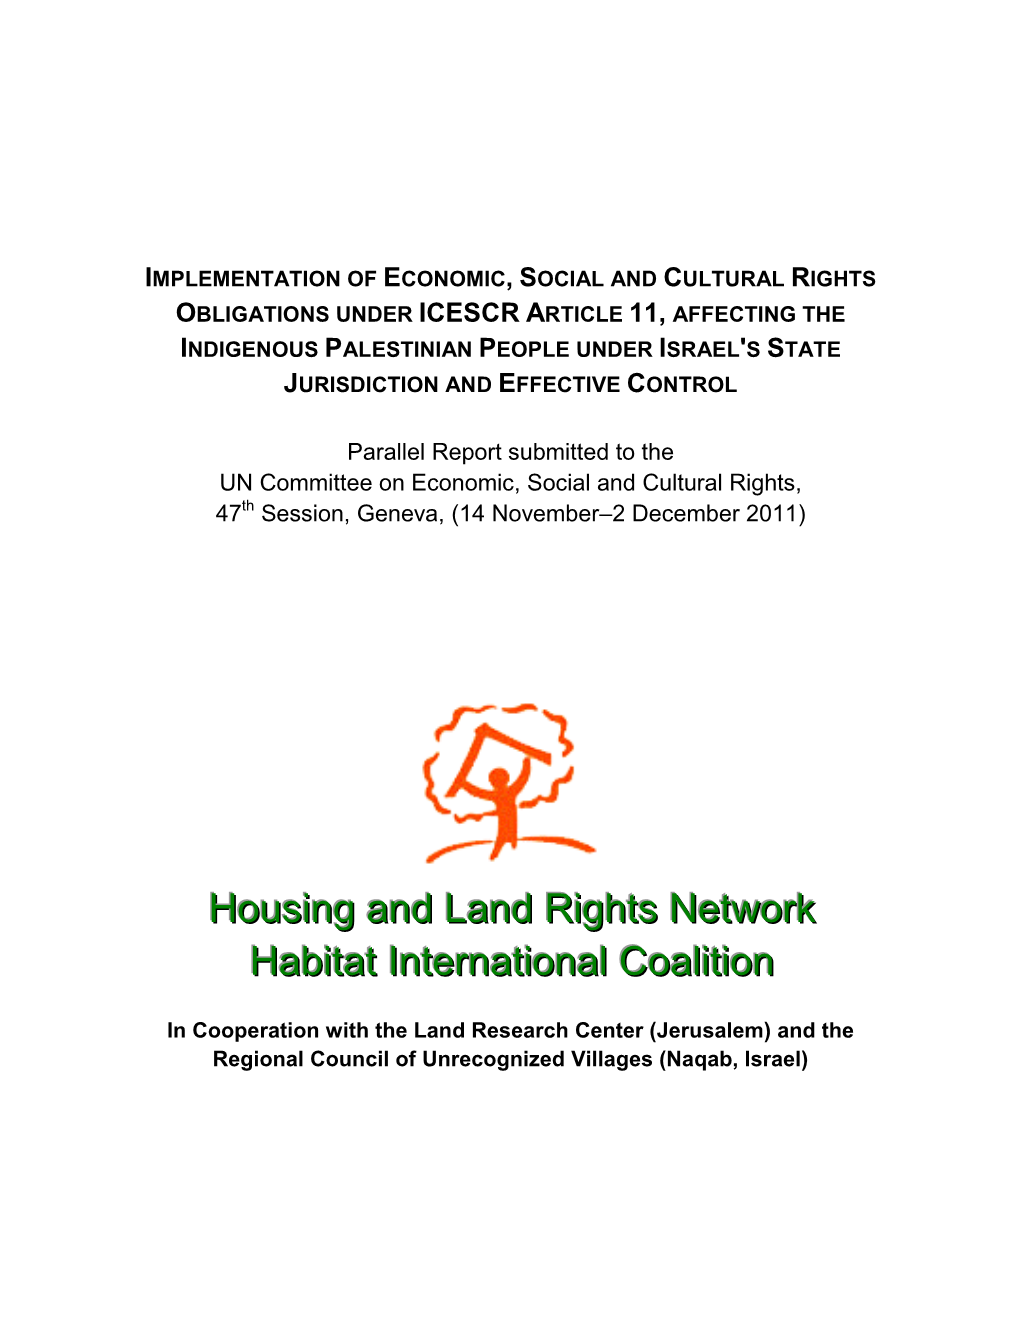 Housing and Land Rights Network Habitat International Coalition